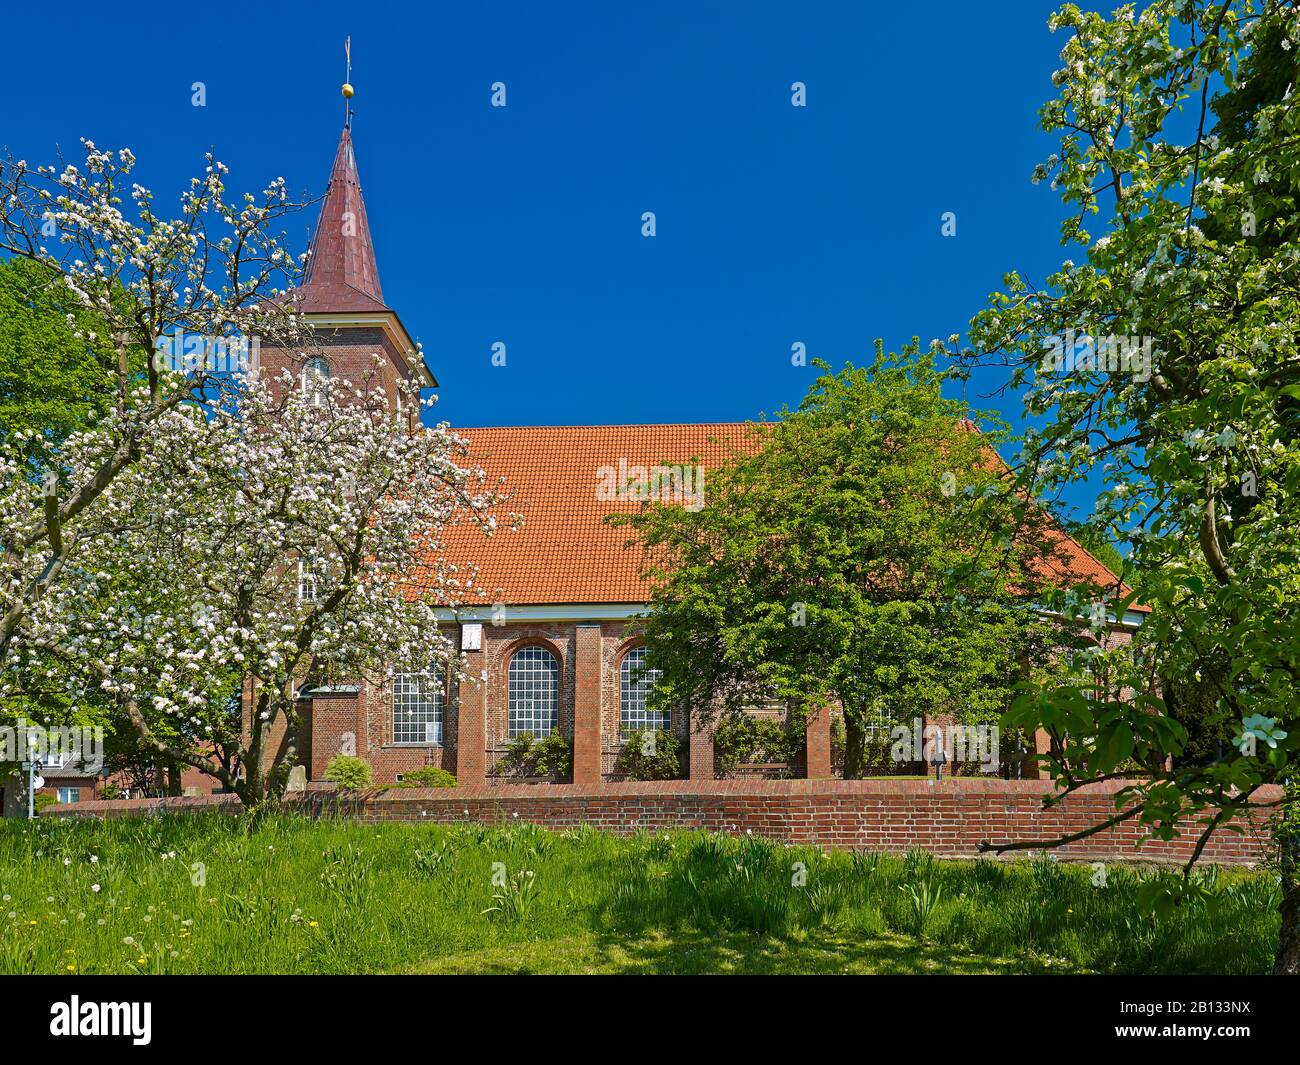 St. Pankratius-Kirche in Neuenfelde-Altes Land, Hansestadt Hamburg, Deutschland Stockfoto